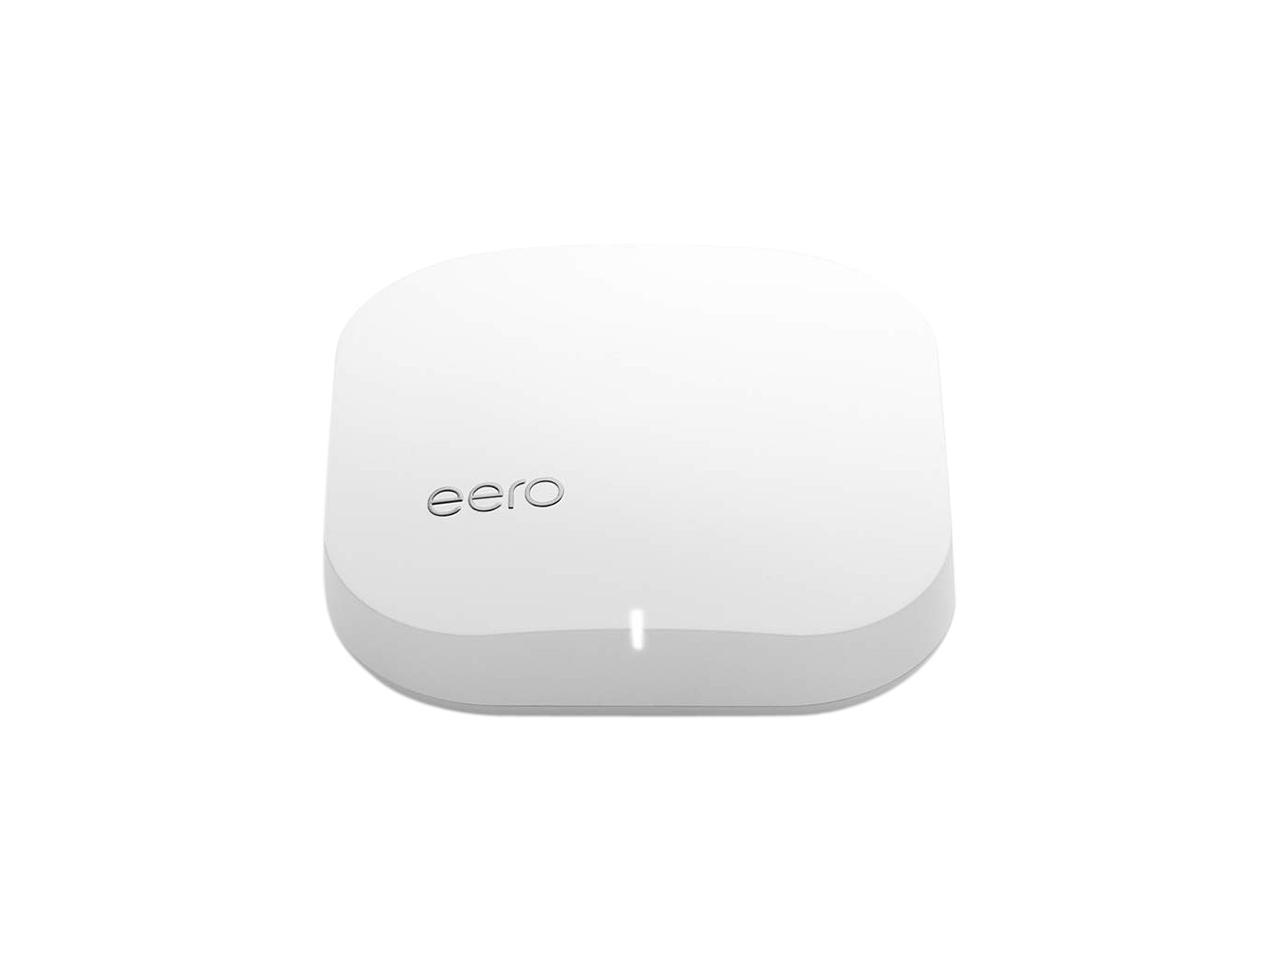 Eero Pro Mesh Router $99.5